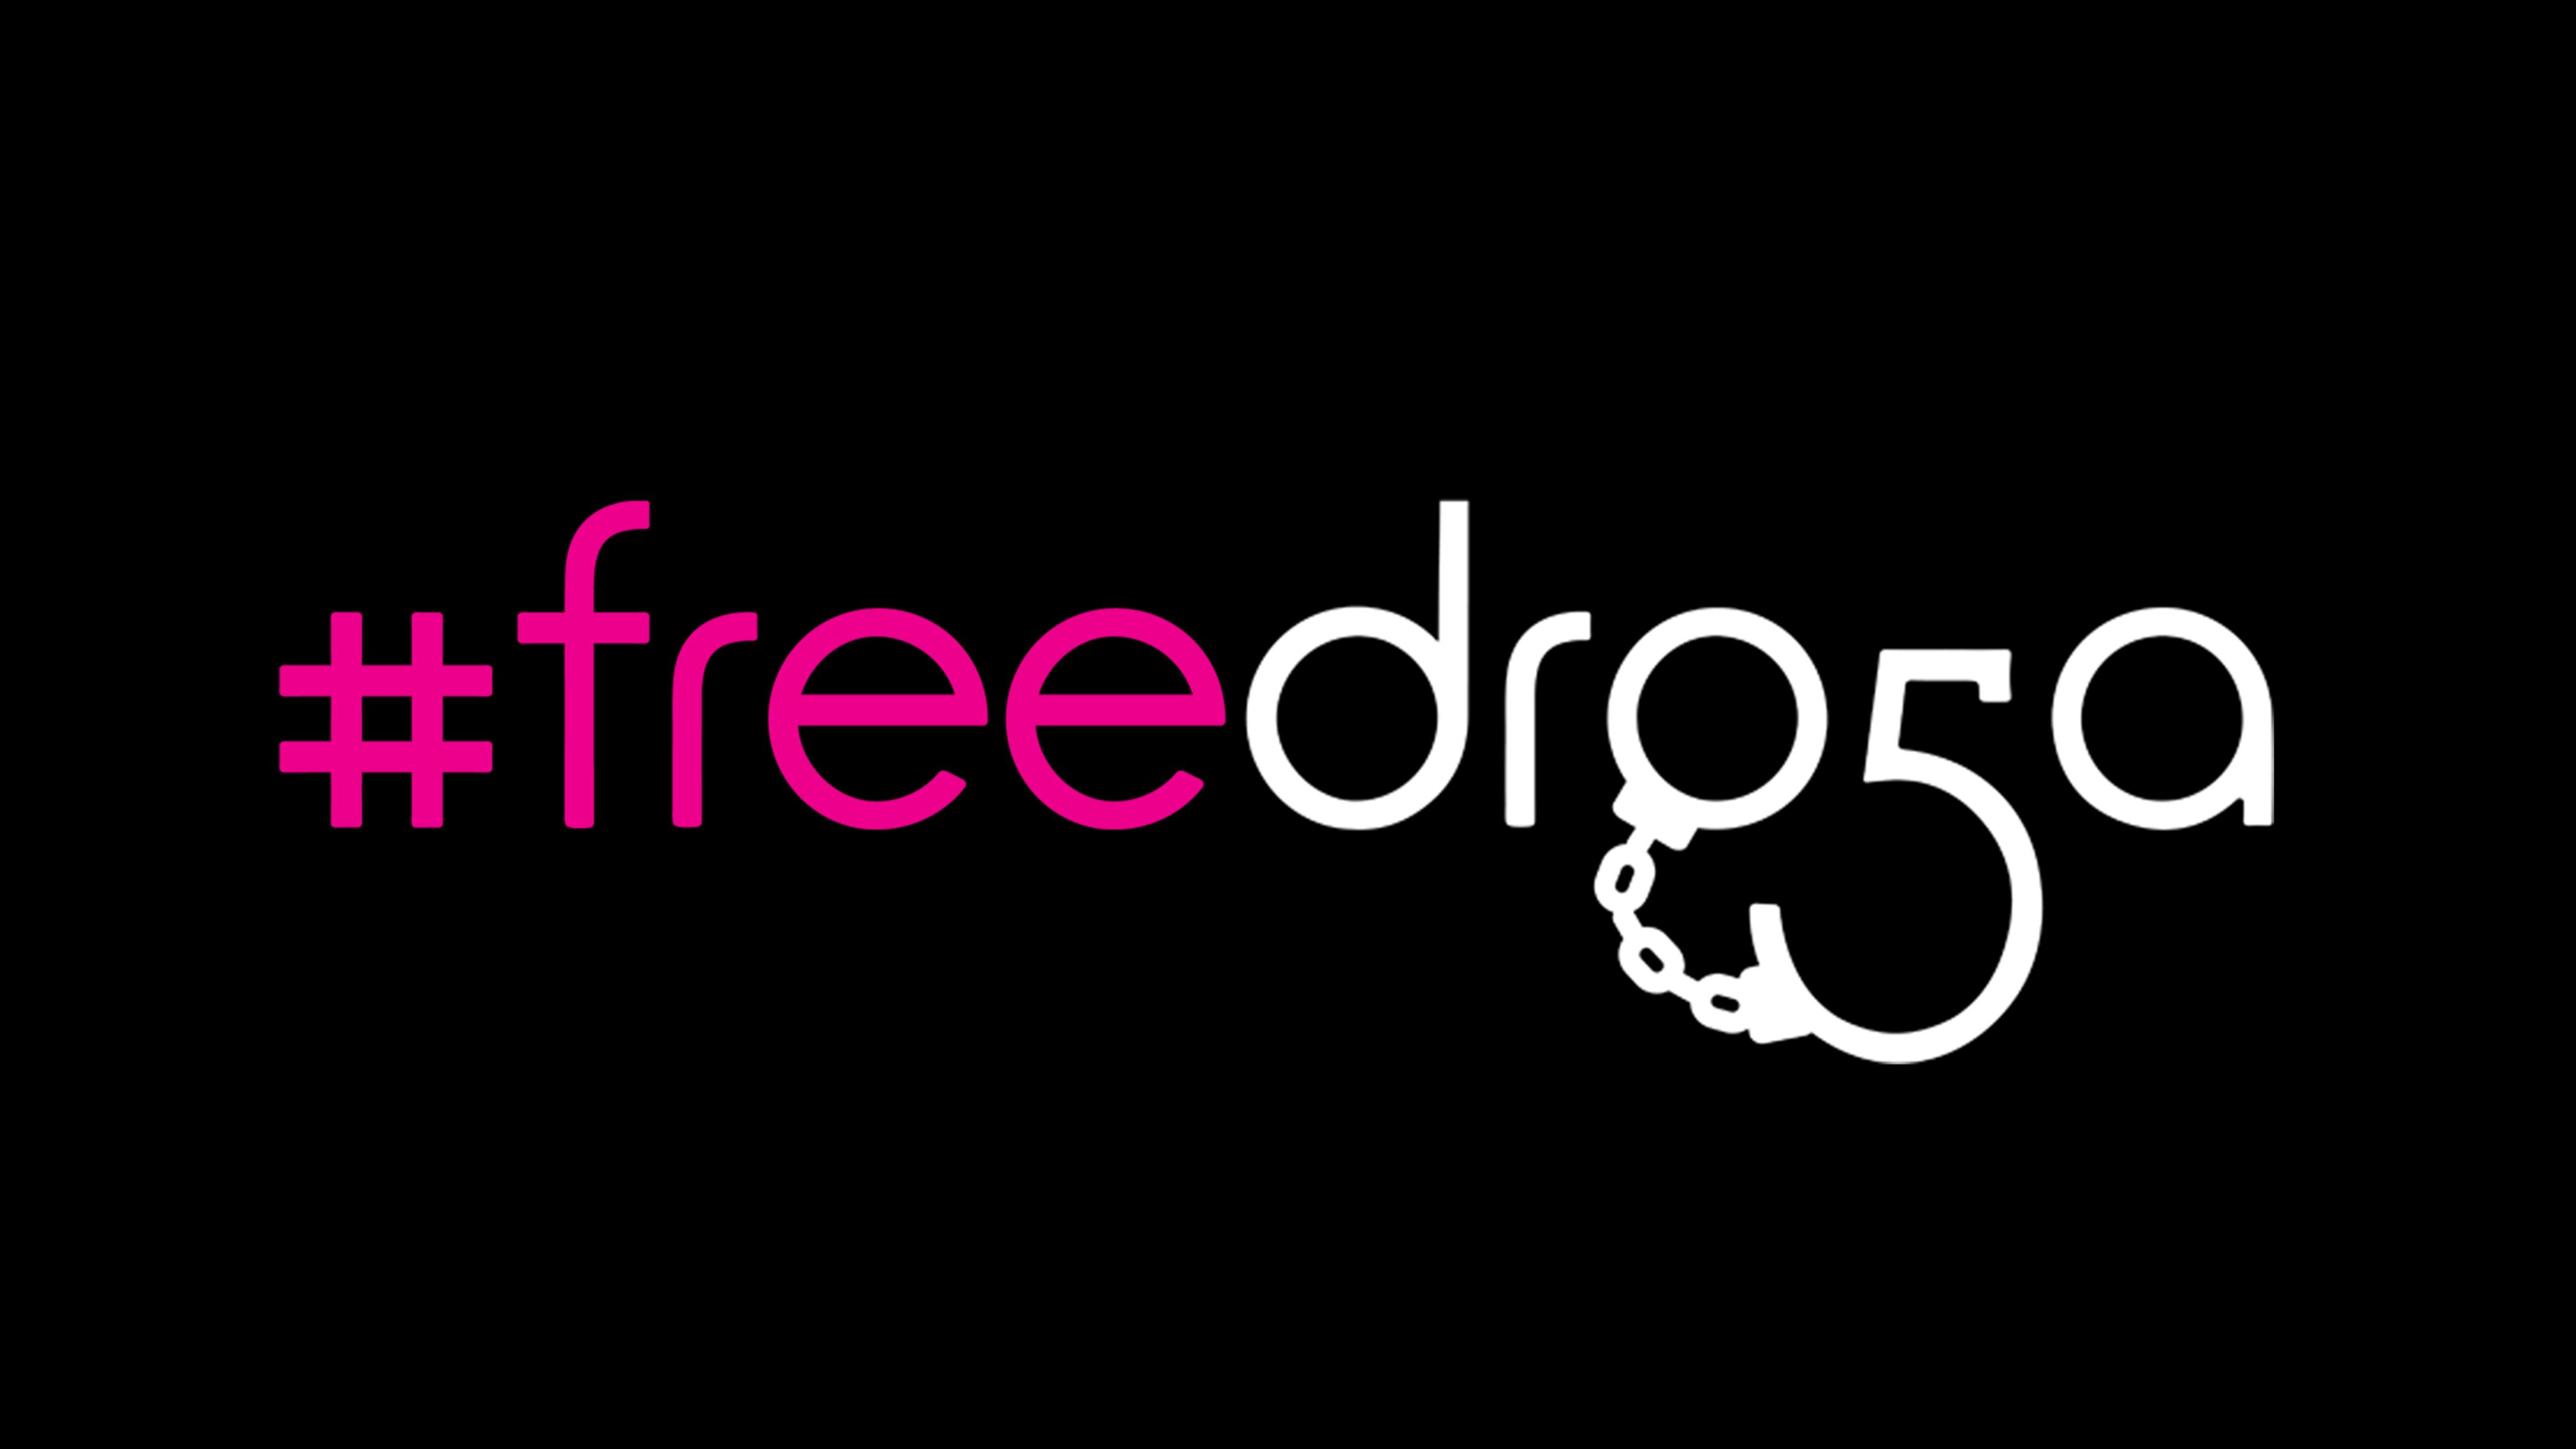 Crashing Cannes with #freedroga